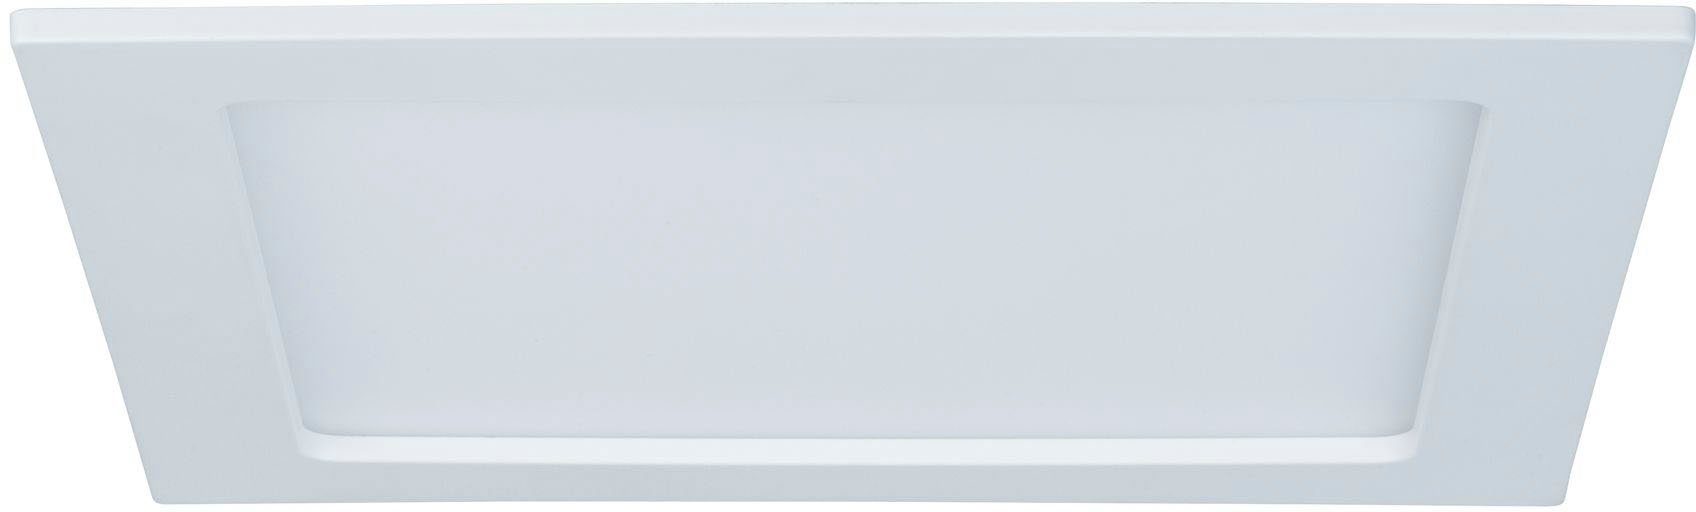 IP44 integriert, eckig 9W fest Panel spritzwassergeschützt Weiß Dimmbar Deckenleuchte, LED Paulmann Neutralweiß, Badleuchte LED